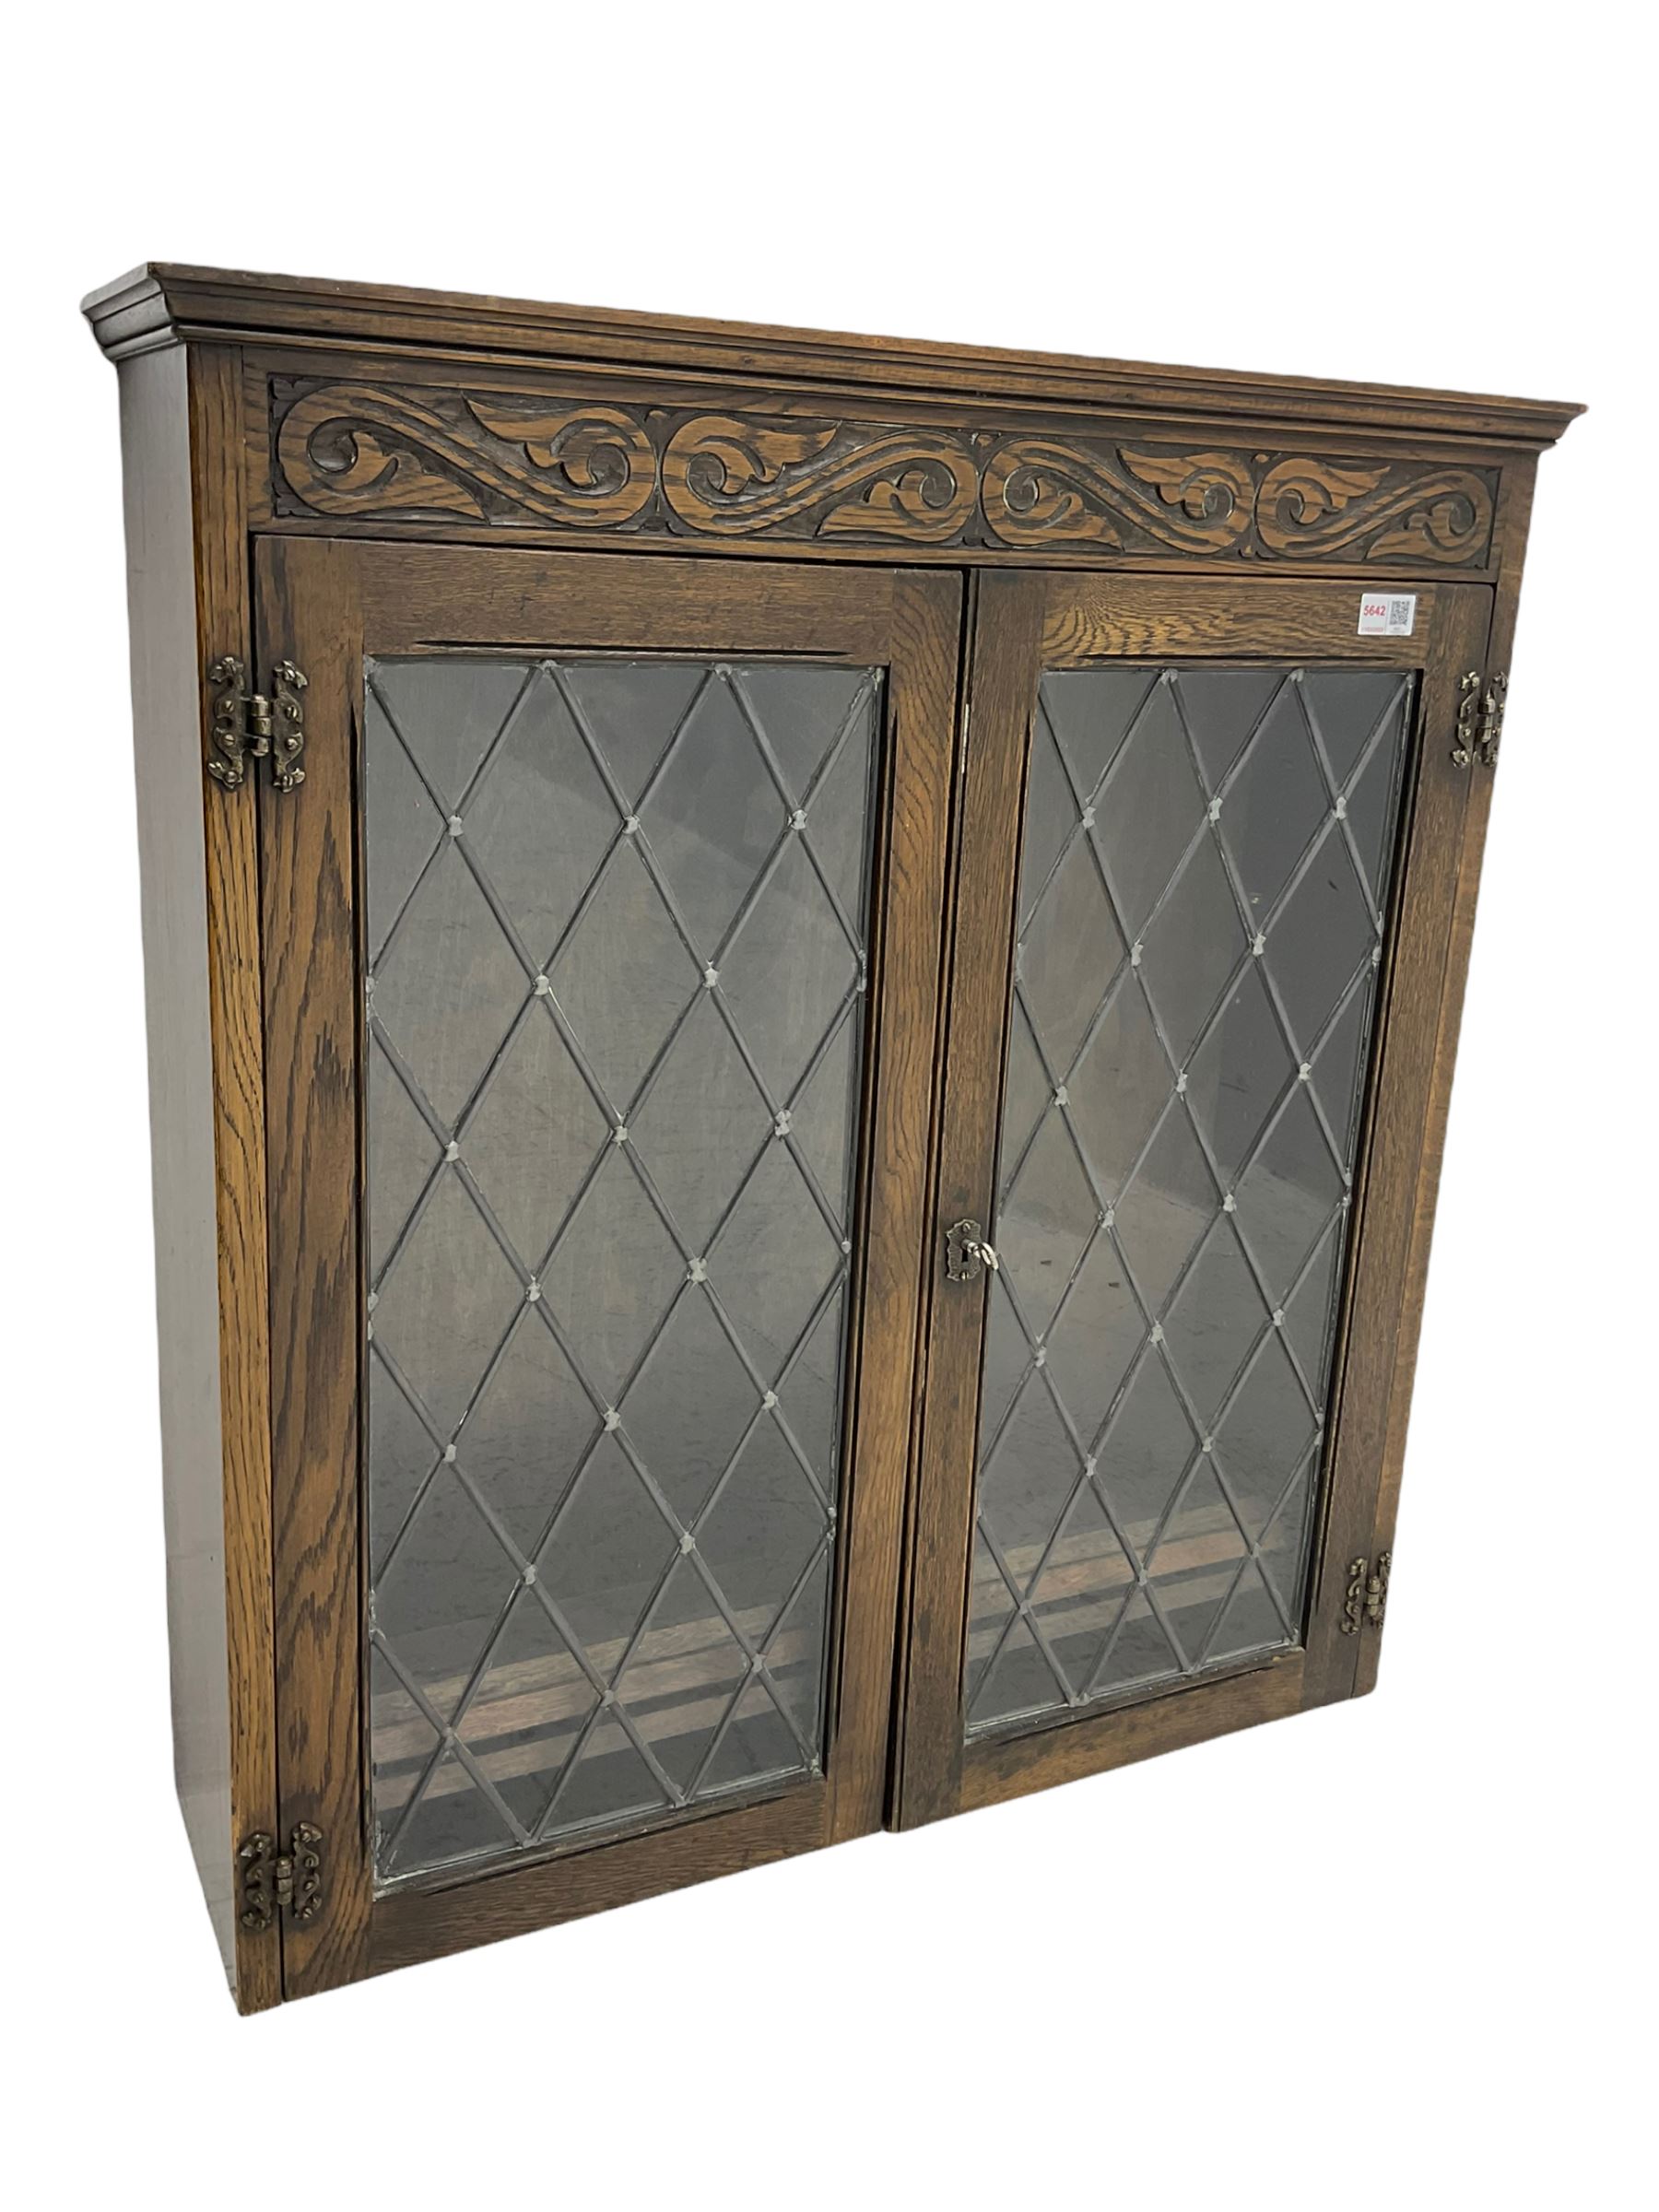 Oak bookcase with lead glazed doors - Image 4 of 5